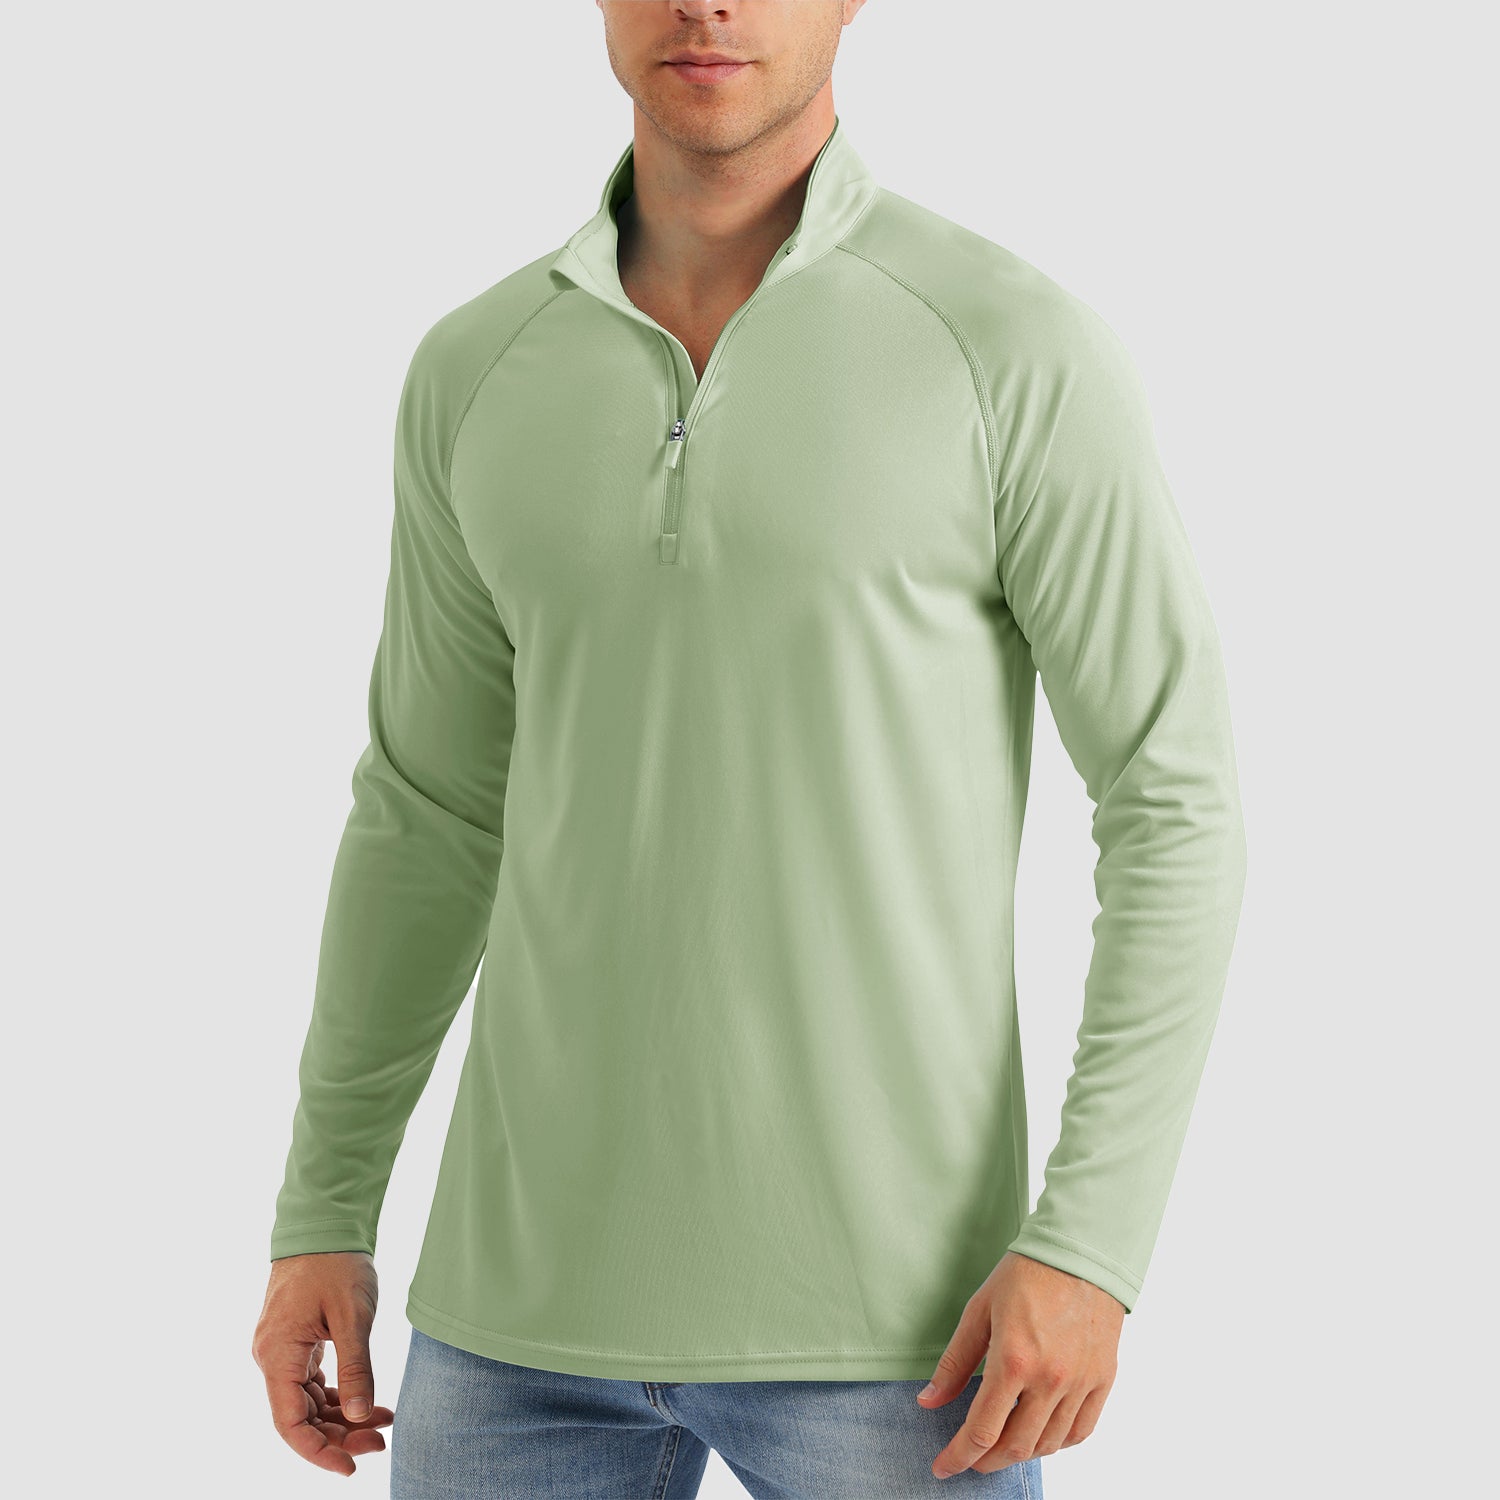 MAGCOMSEN Men's Long Sleeve Sun Shirts UPF 50+ Tees 1/4 Zip Up Fishing Running Rash Guard T-shirts Outdoor Shirt